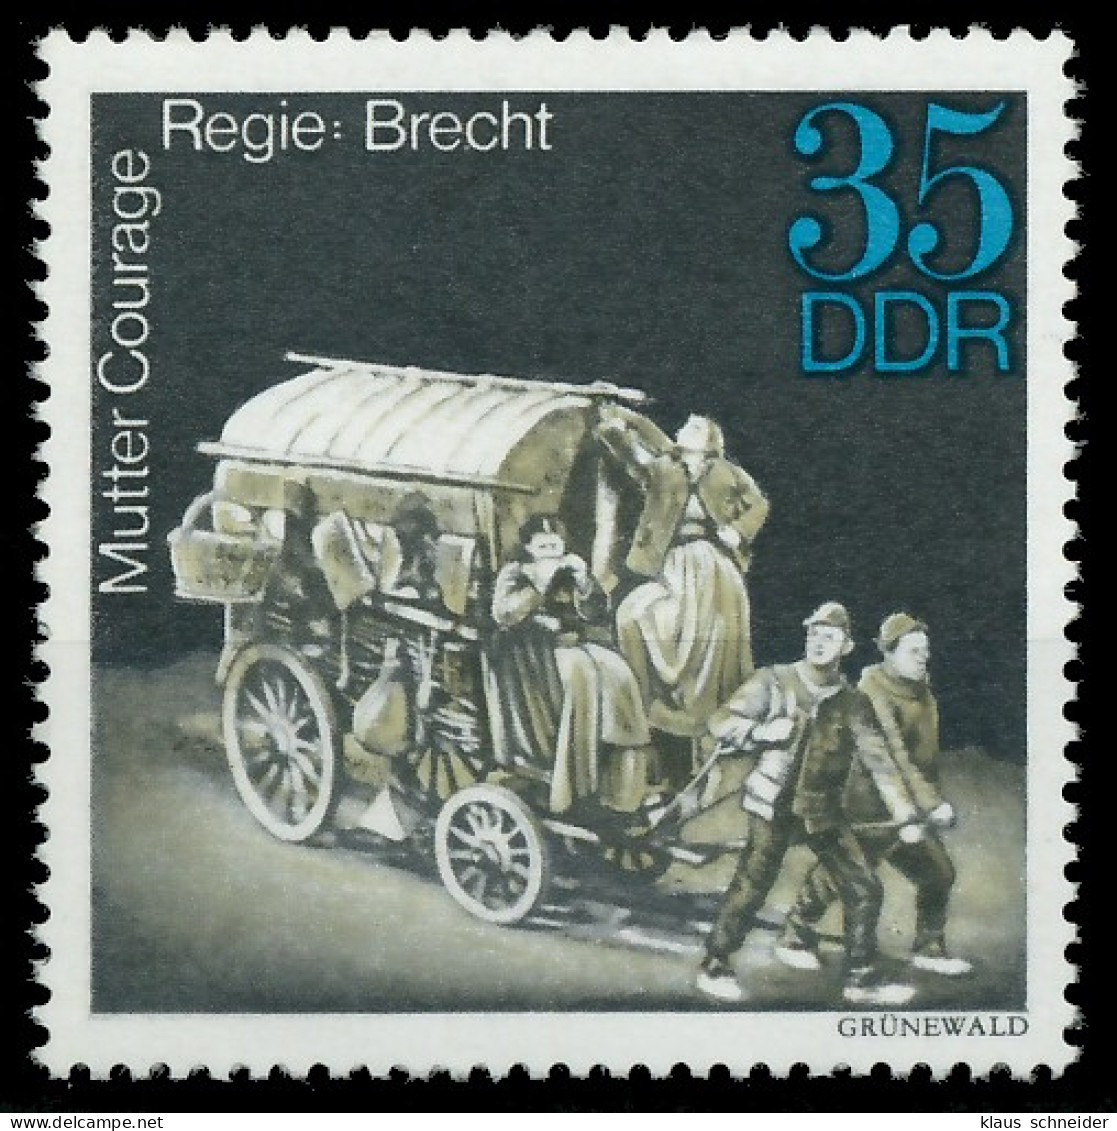 DDR 1973 Nr 1852 Postfrisch SF786E6 - Neufs